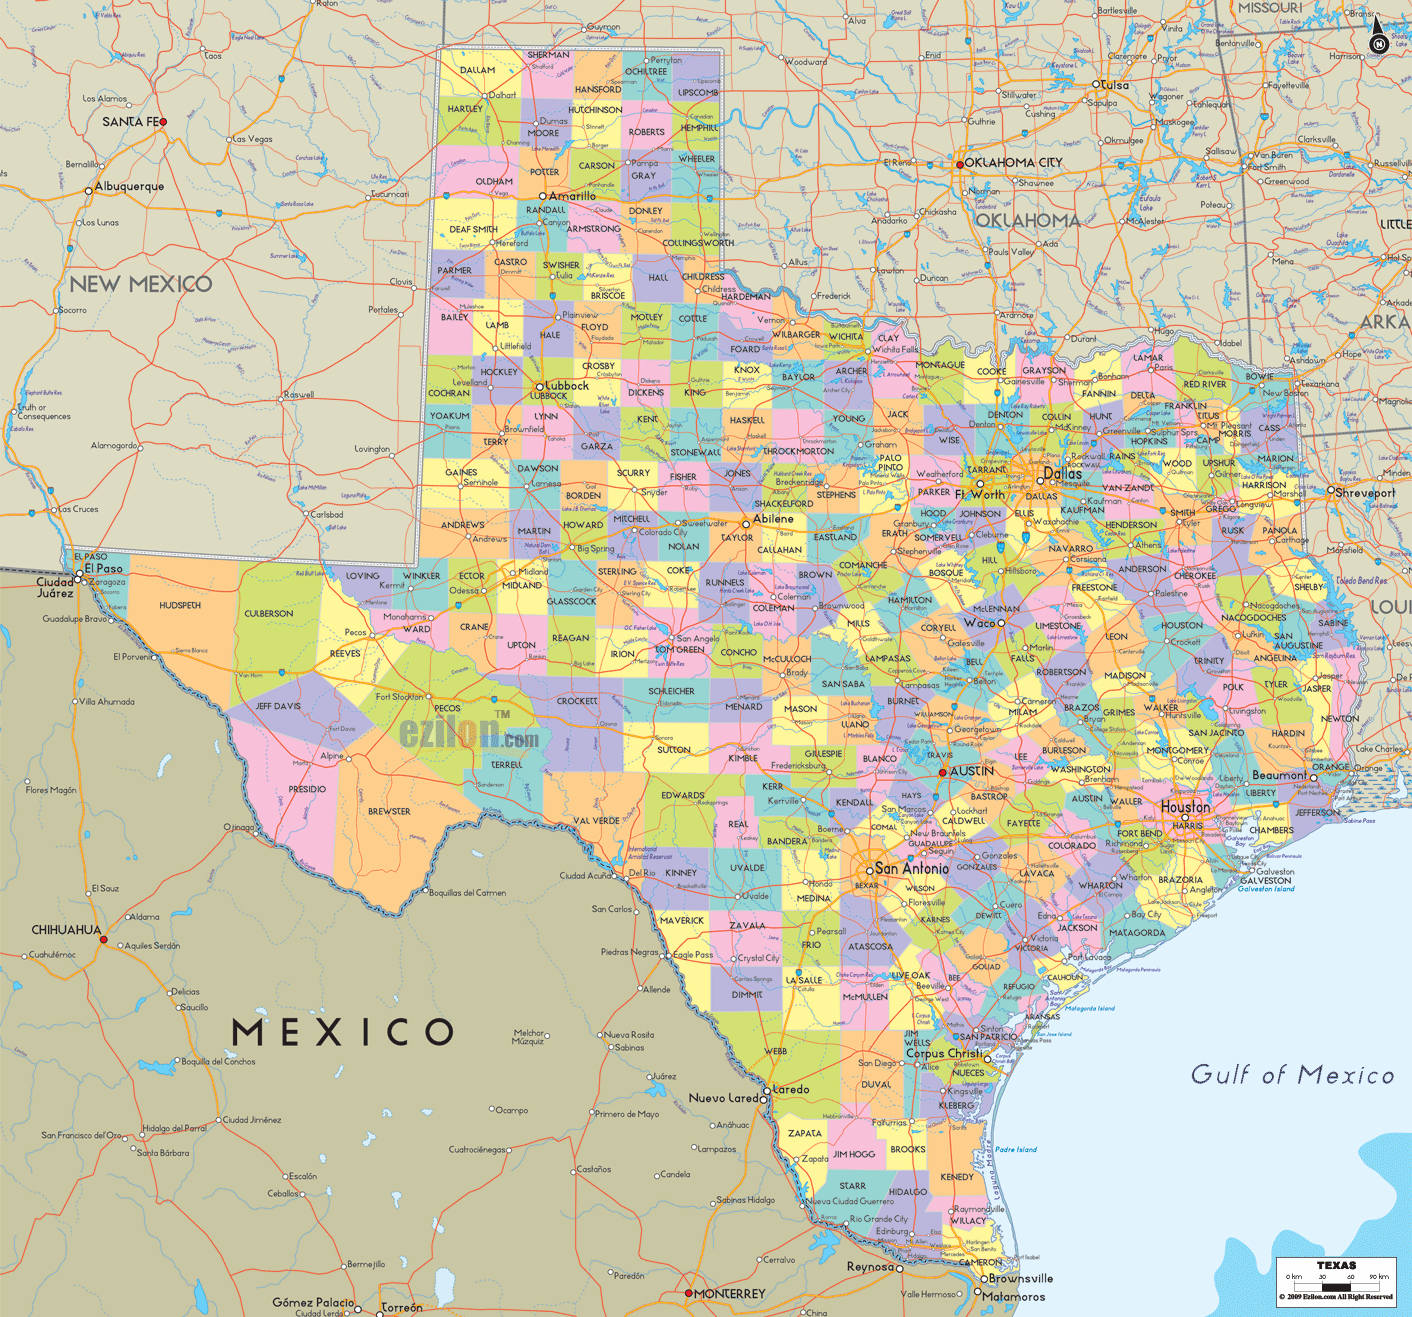 Printable Texas Road Mapphoto Gallery Offeeebcbdffddcbded Map Hi - Printable Texas Road Map